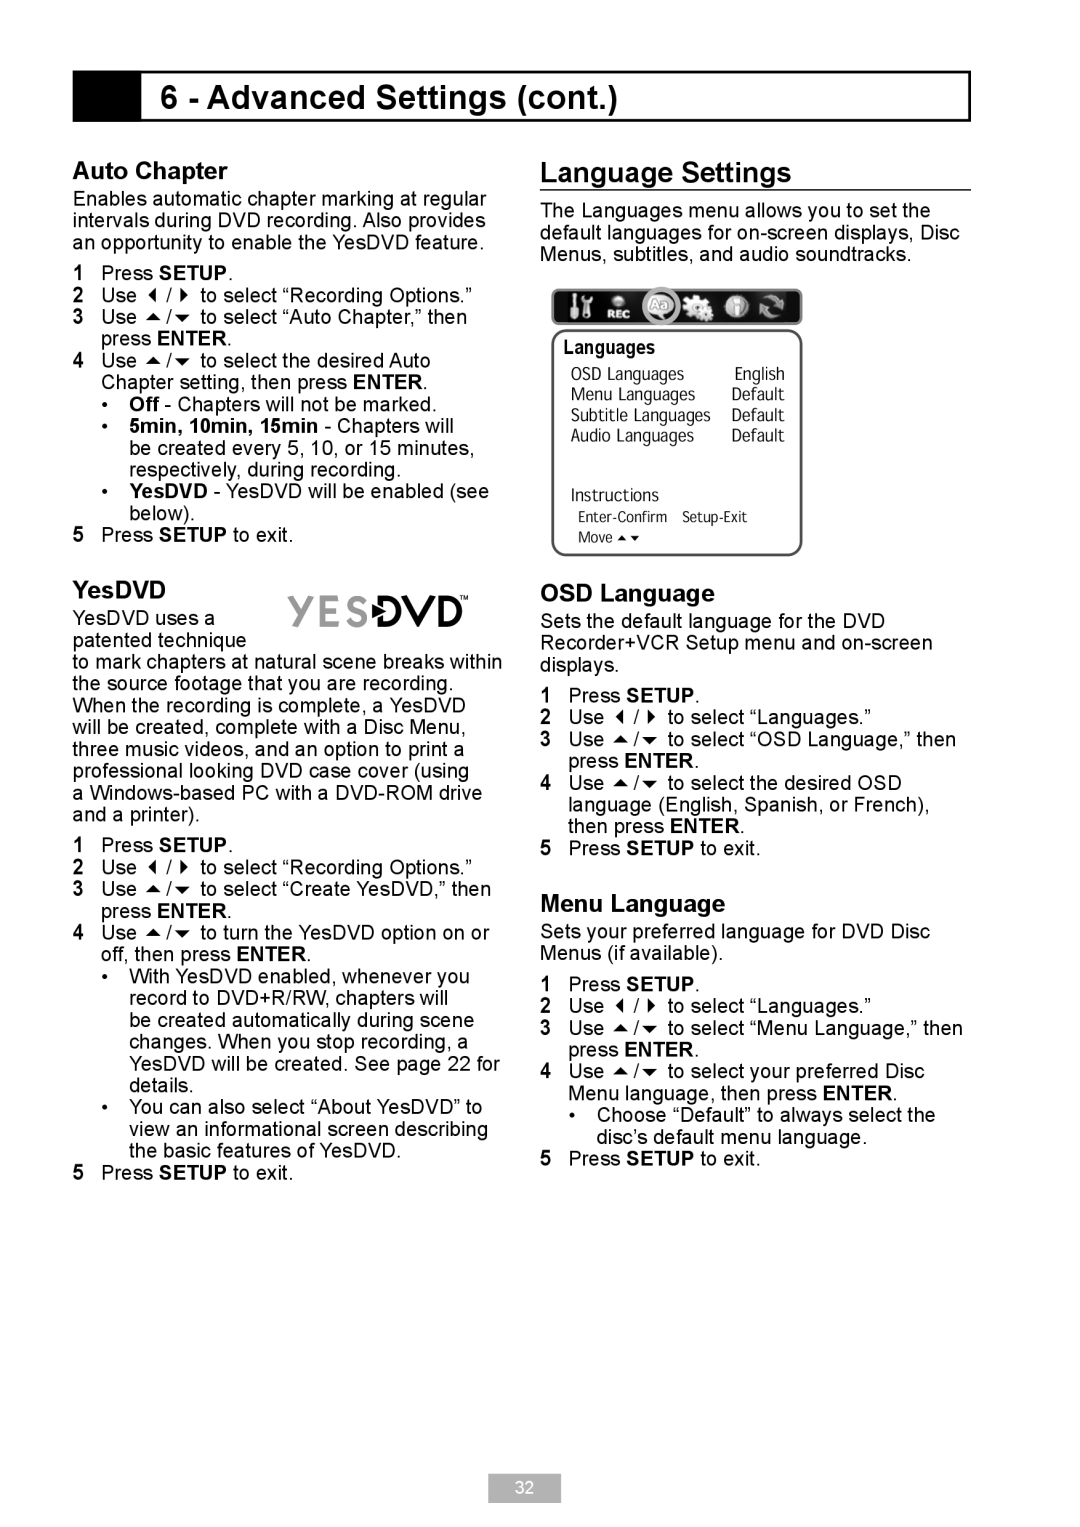 GoVideo VR2940 manual Language Settings, Auto Chapter, YesDVD YesDVD uses a patented technique, OSD Language, Menu Language 